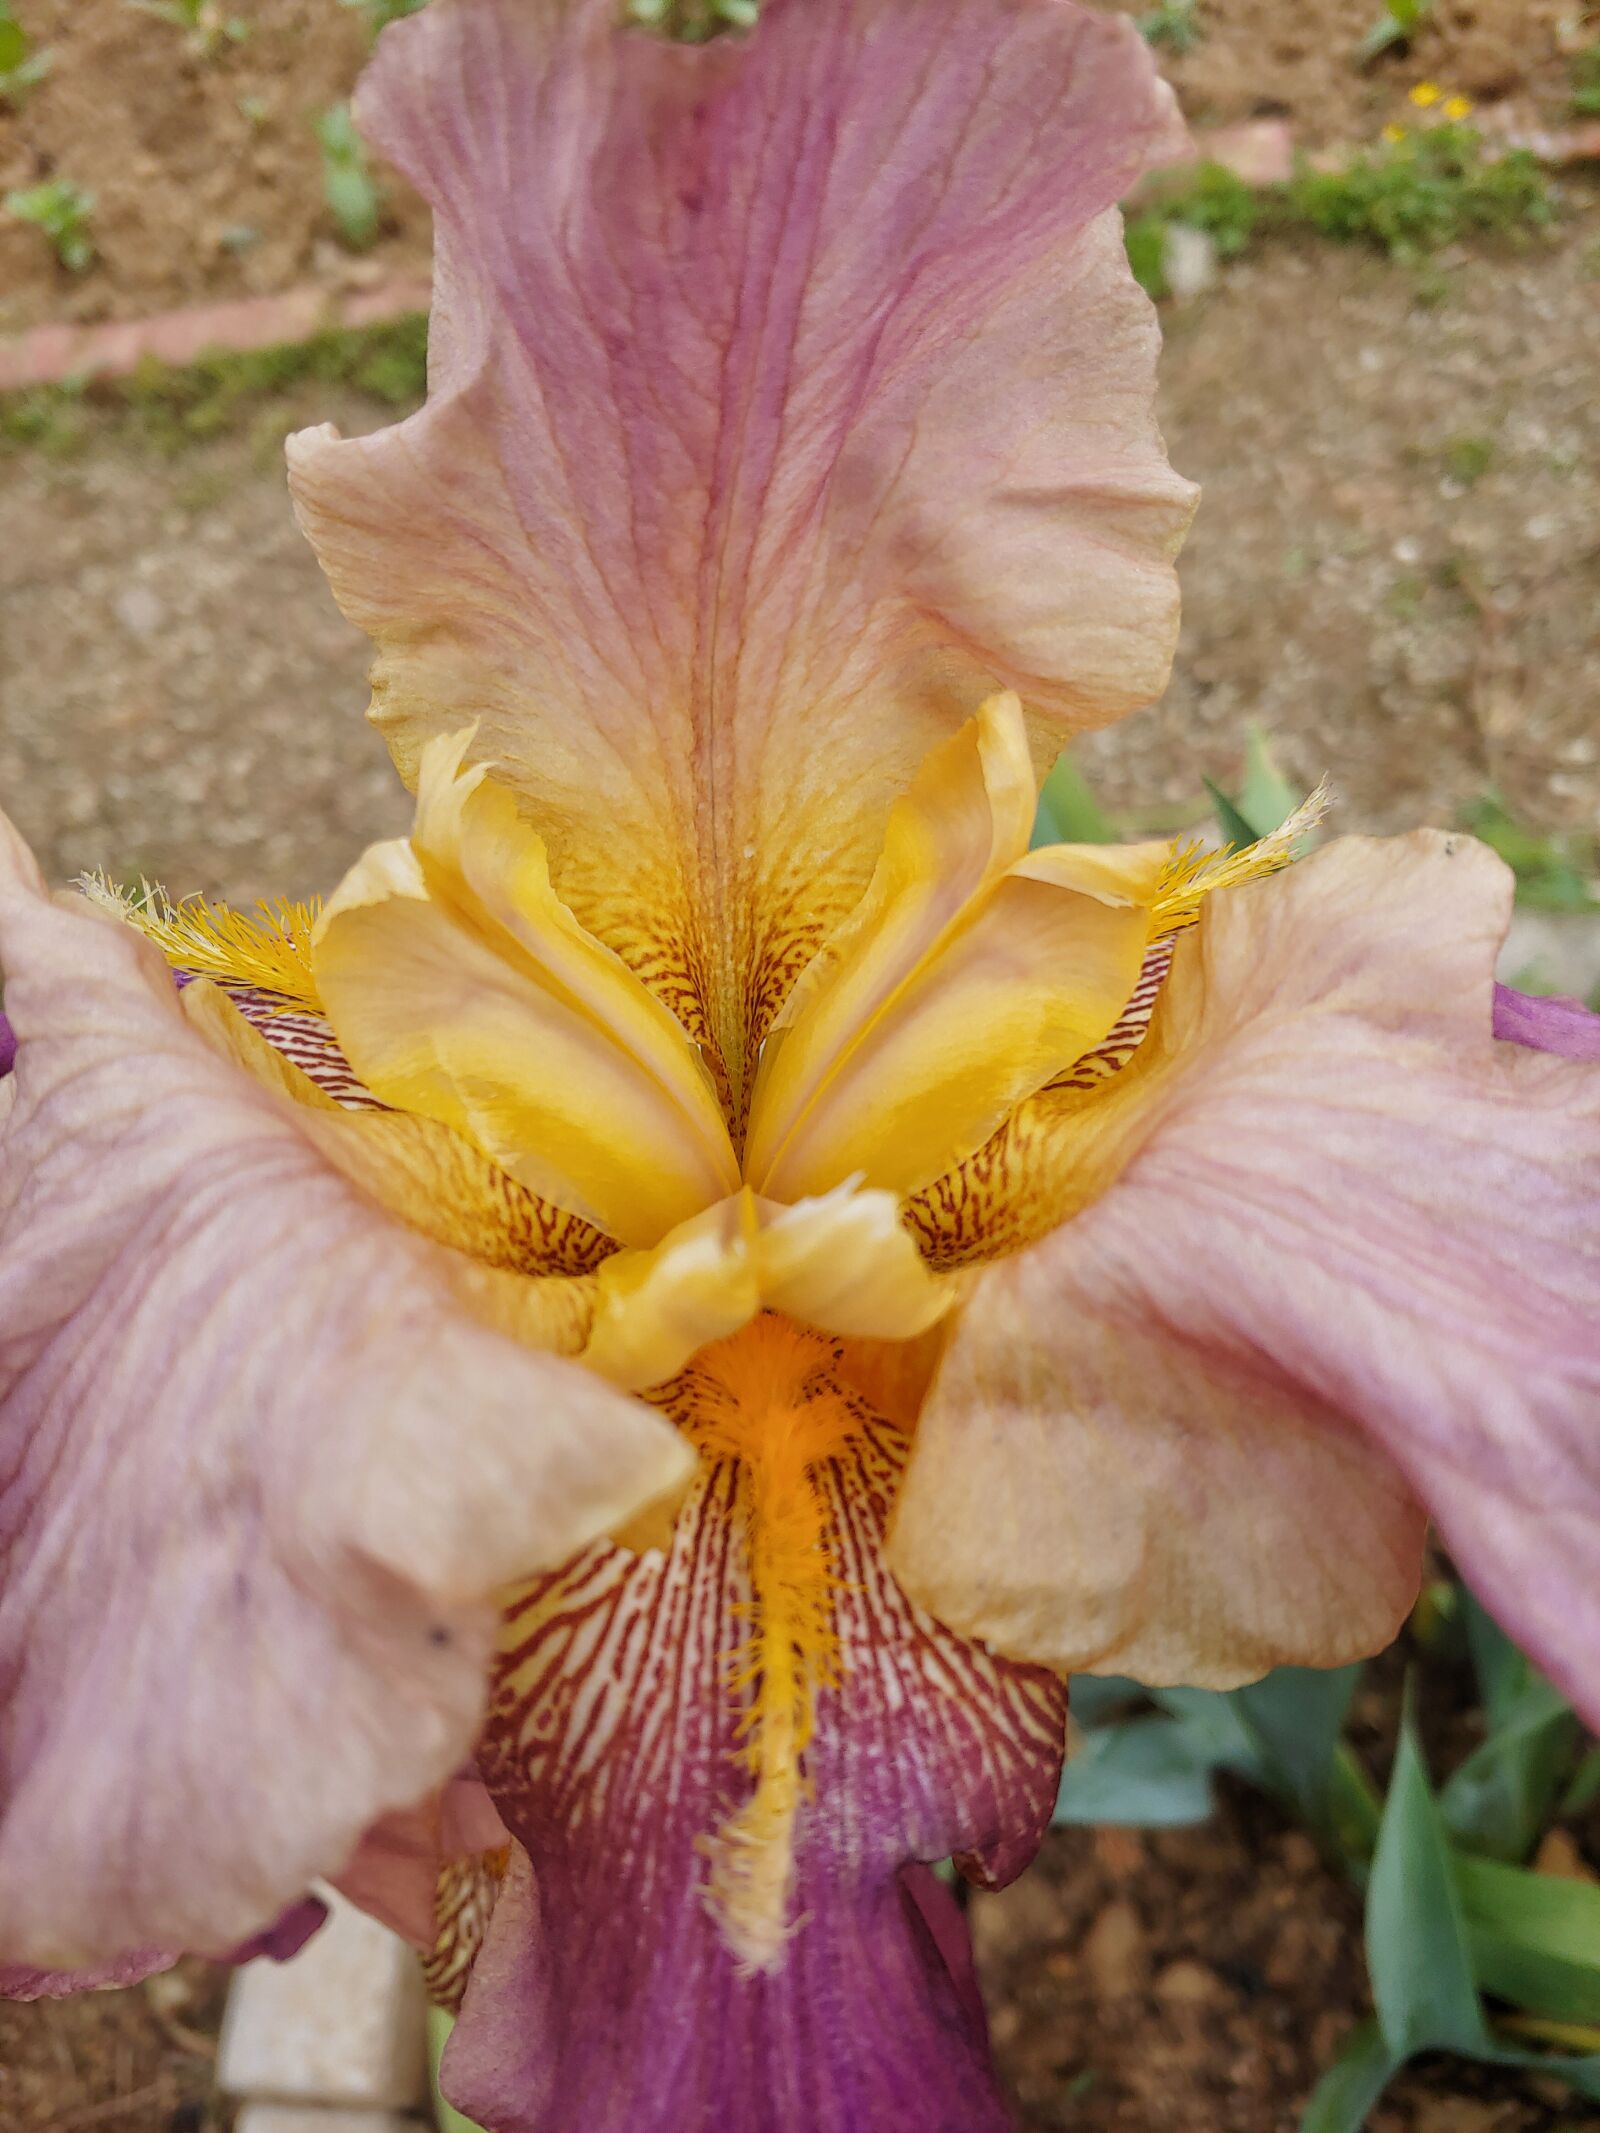 LG G7 THINQ sample photo. Iris, irises, pink flower photography